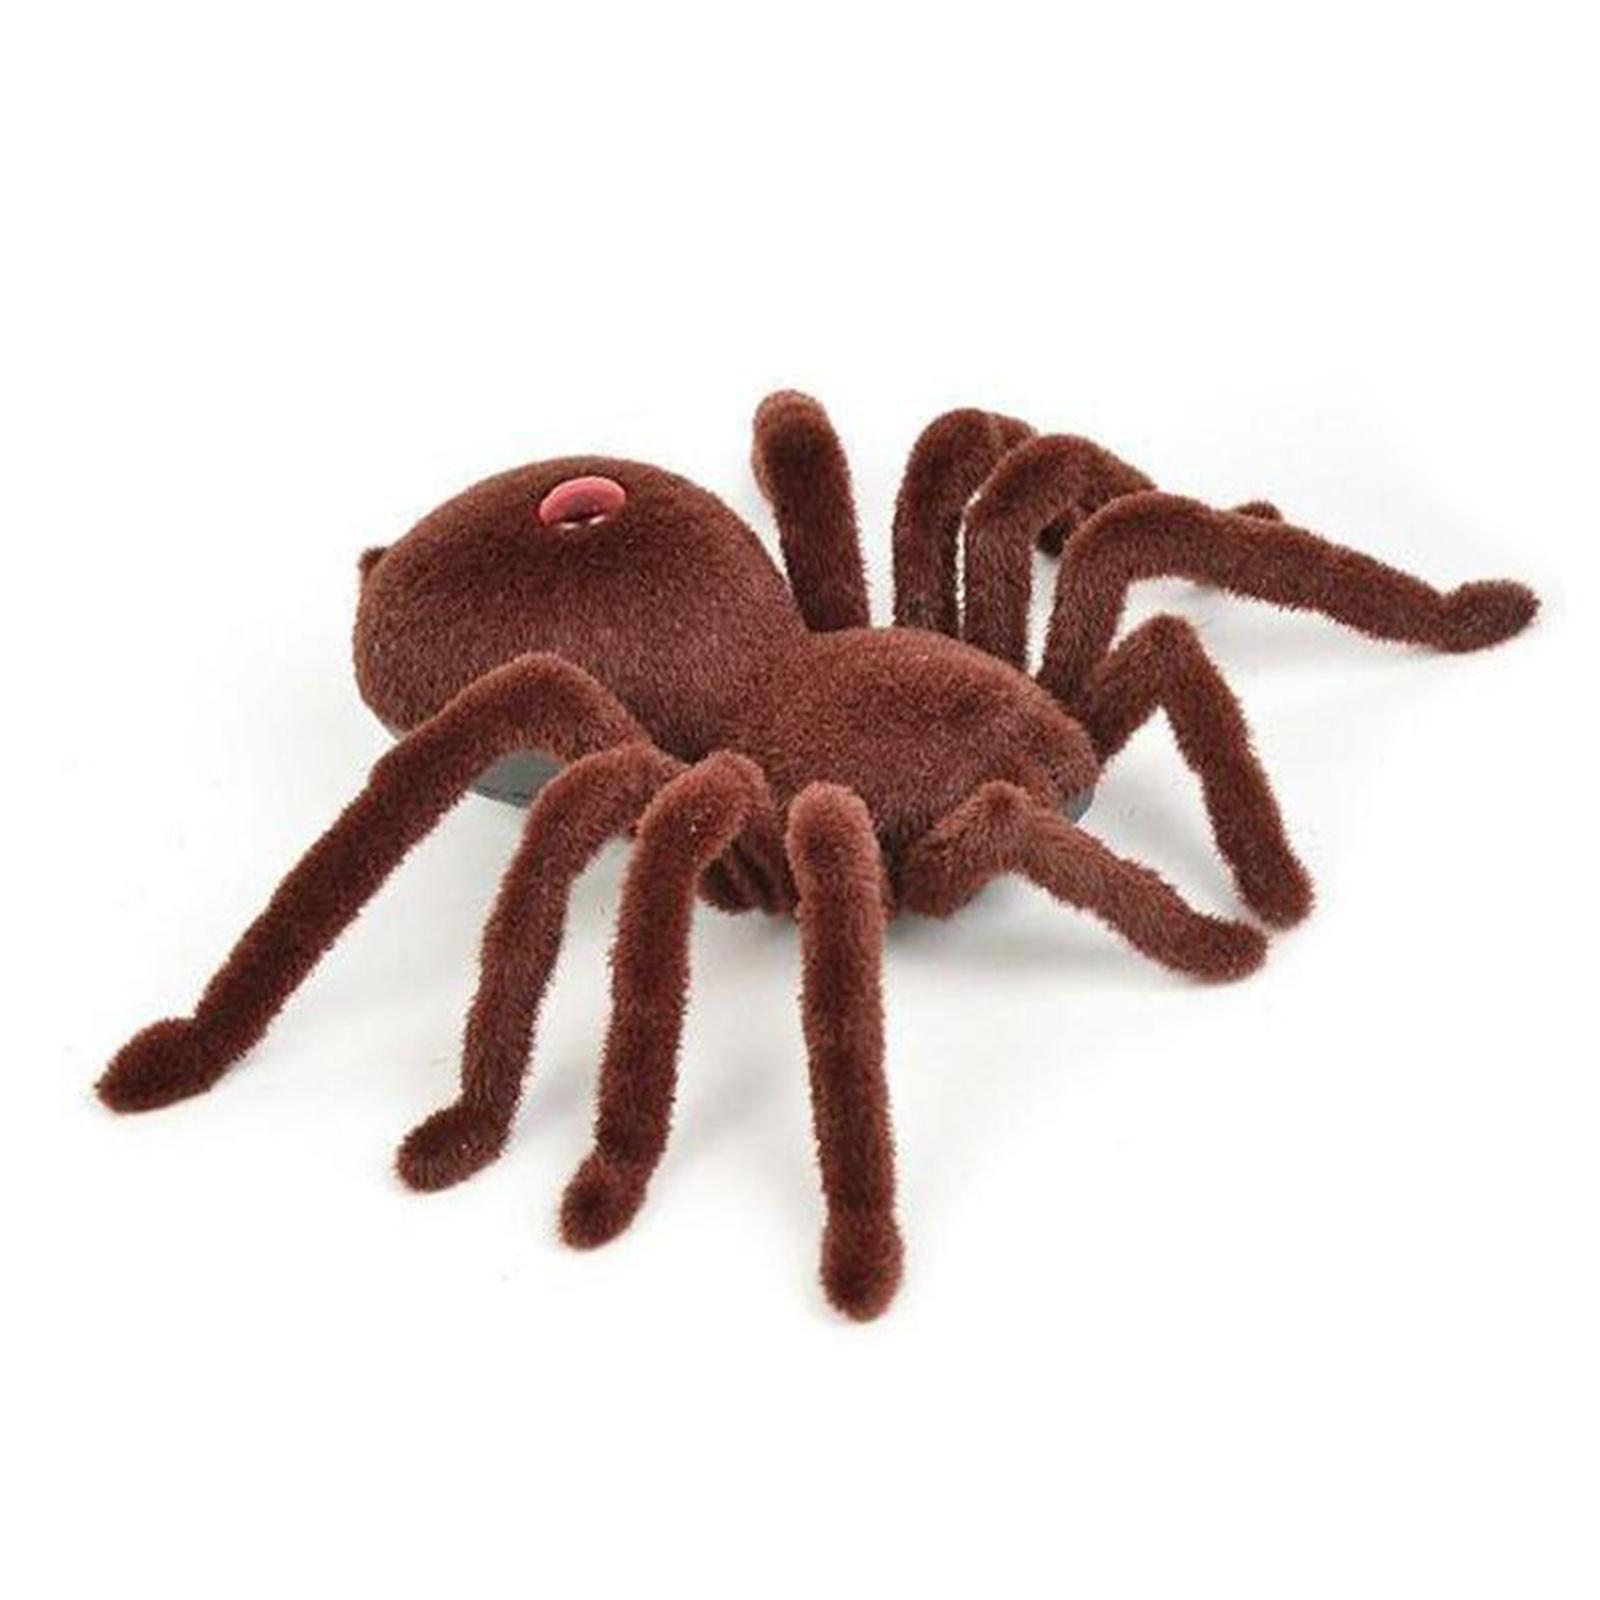 Remote Control Scary Creepy Soft Plush Spider Infrared RC Tarantula Gift C